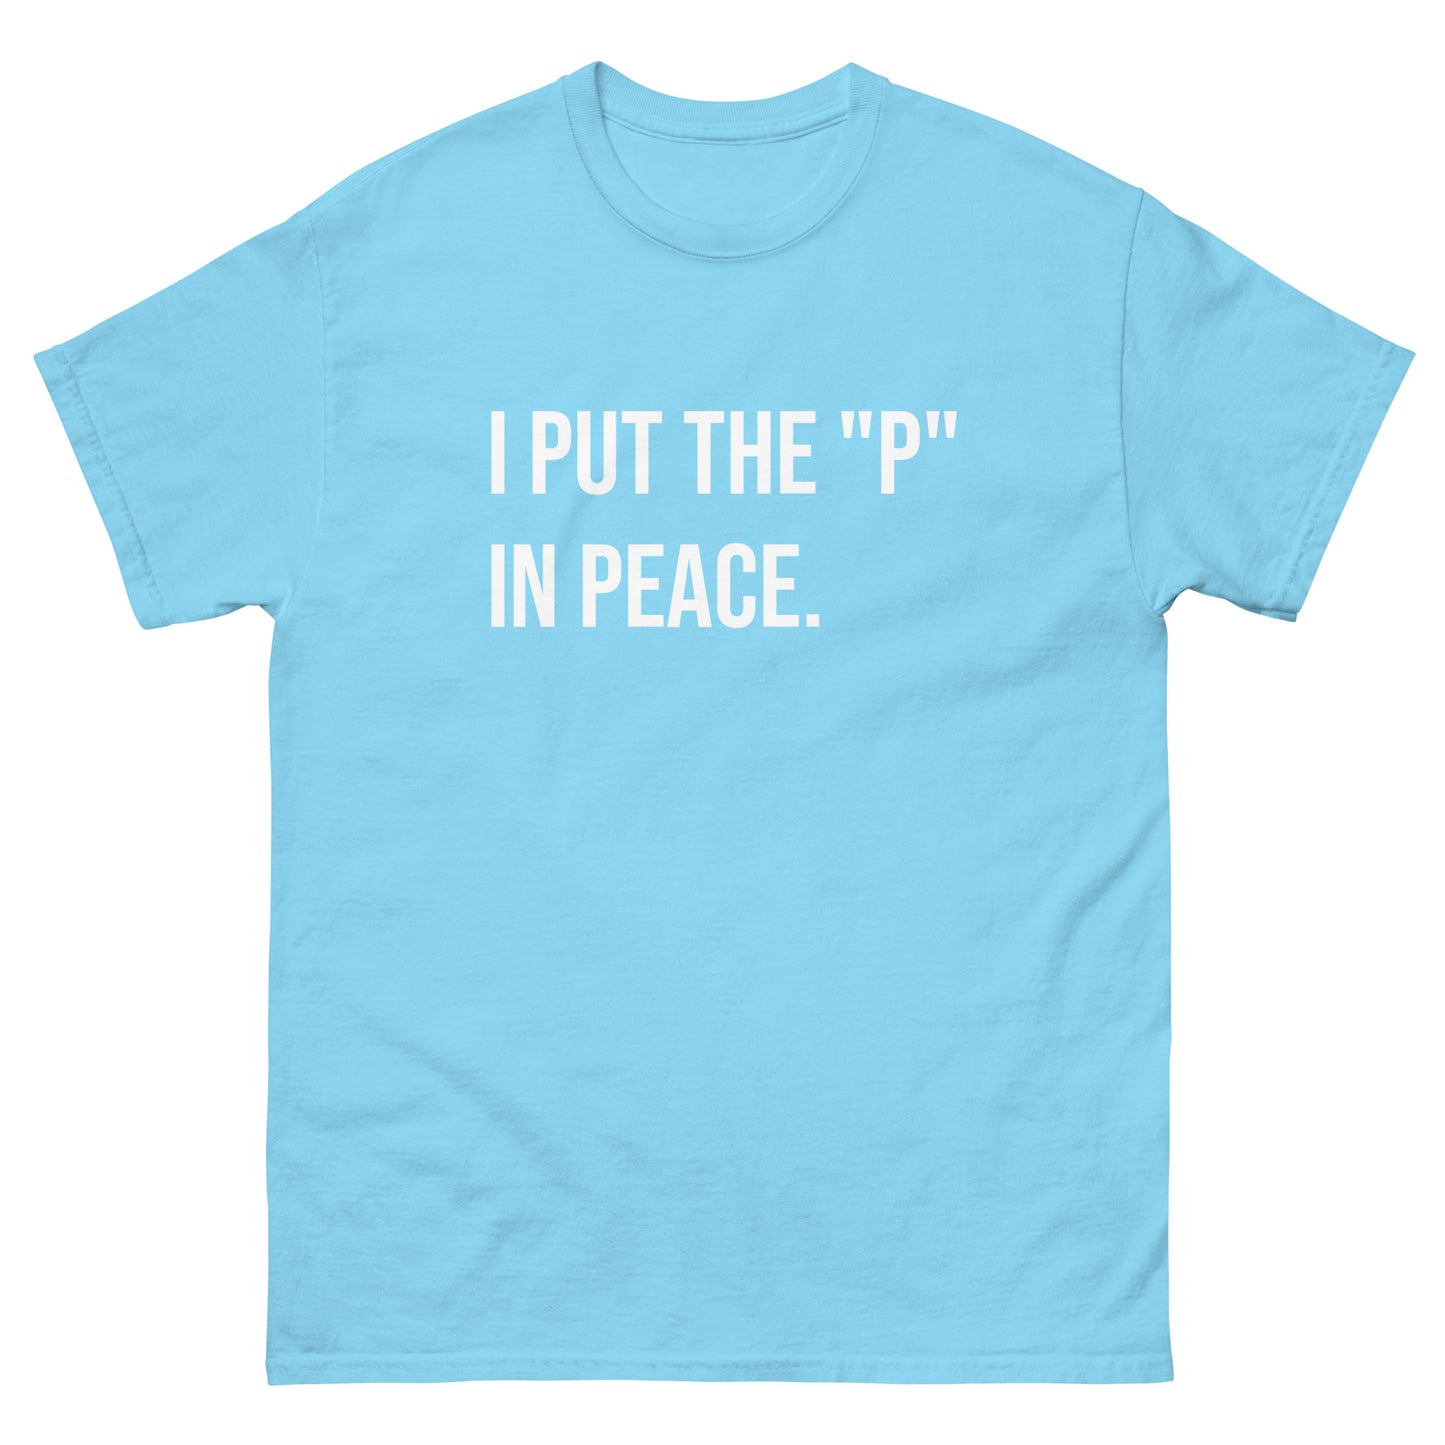 I AM PEACE tee